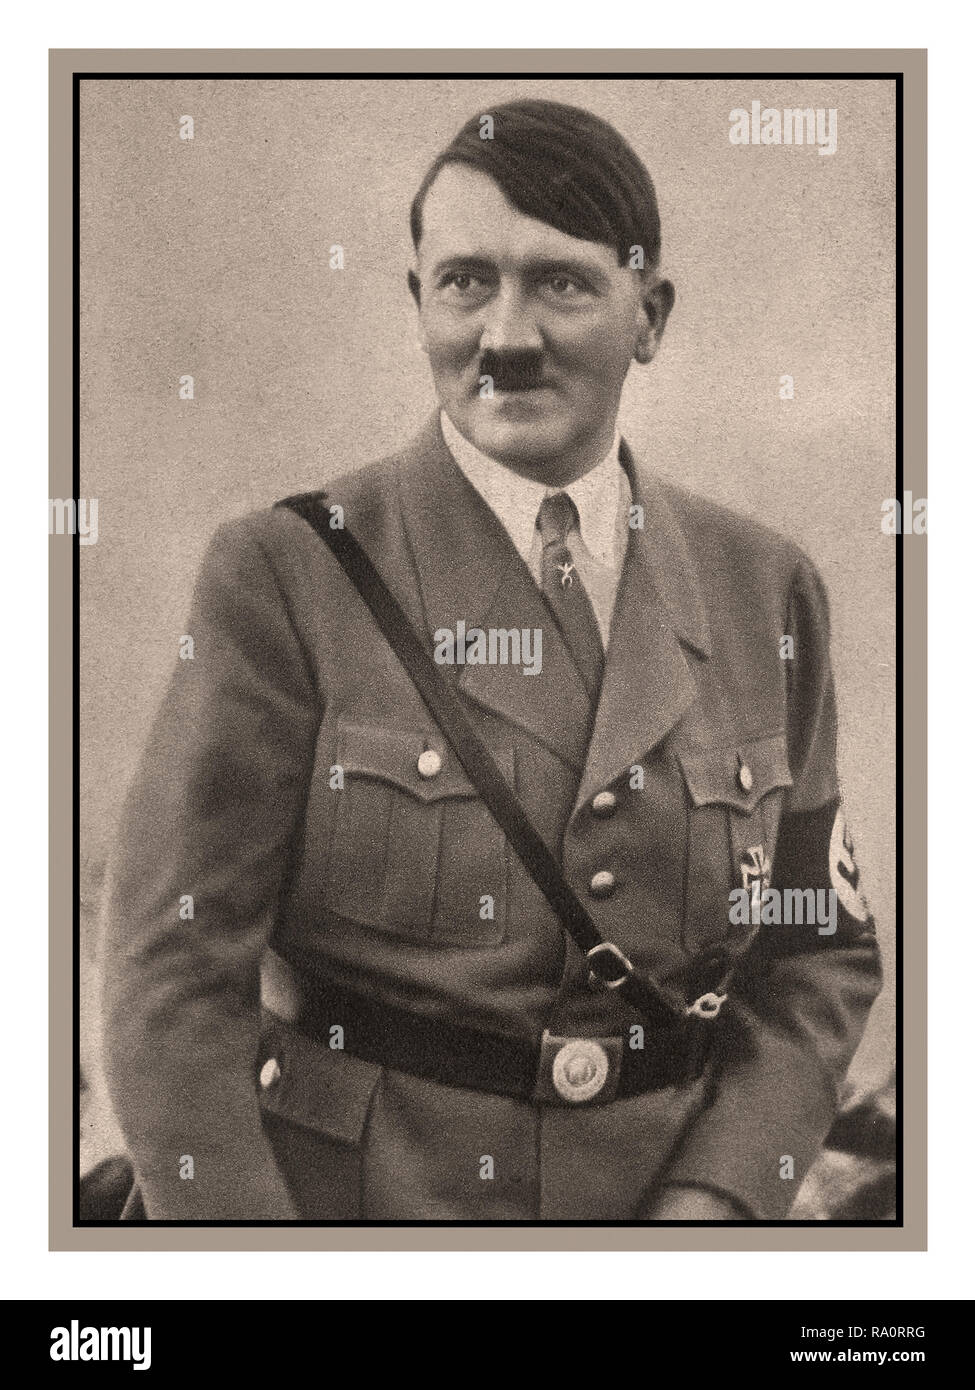 ADOLF HITLER 1933 Propaganda Nazi-Postkartenbild von Adolf Hitler in Uniform mit Hakenkreuz-Armband Stockfoto